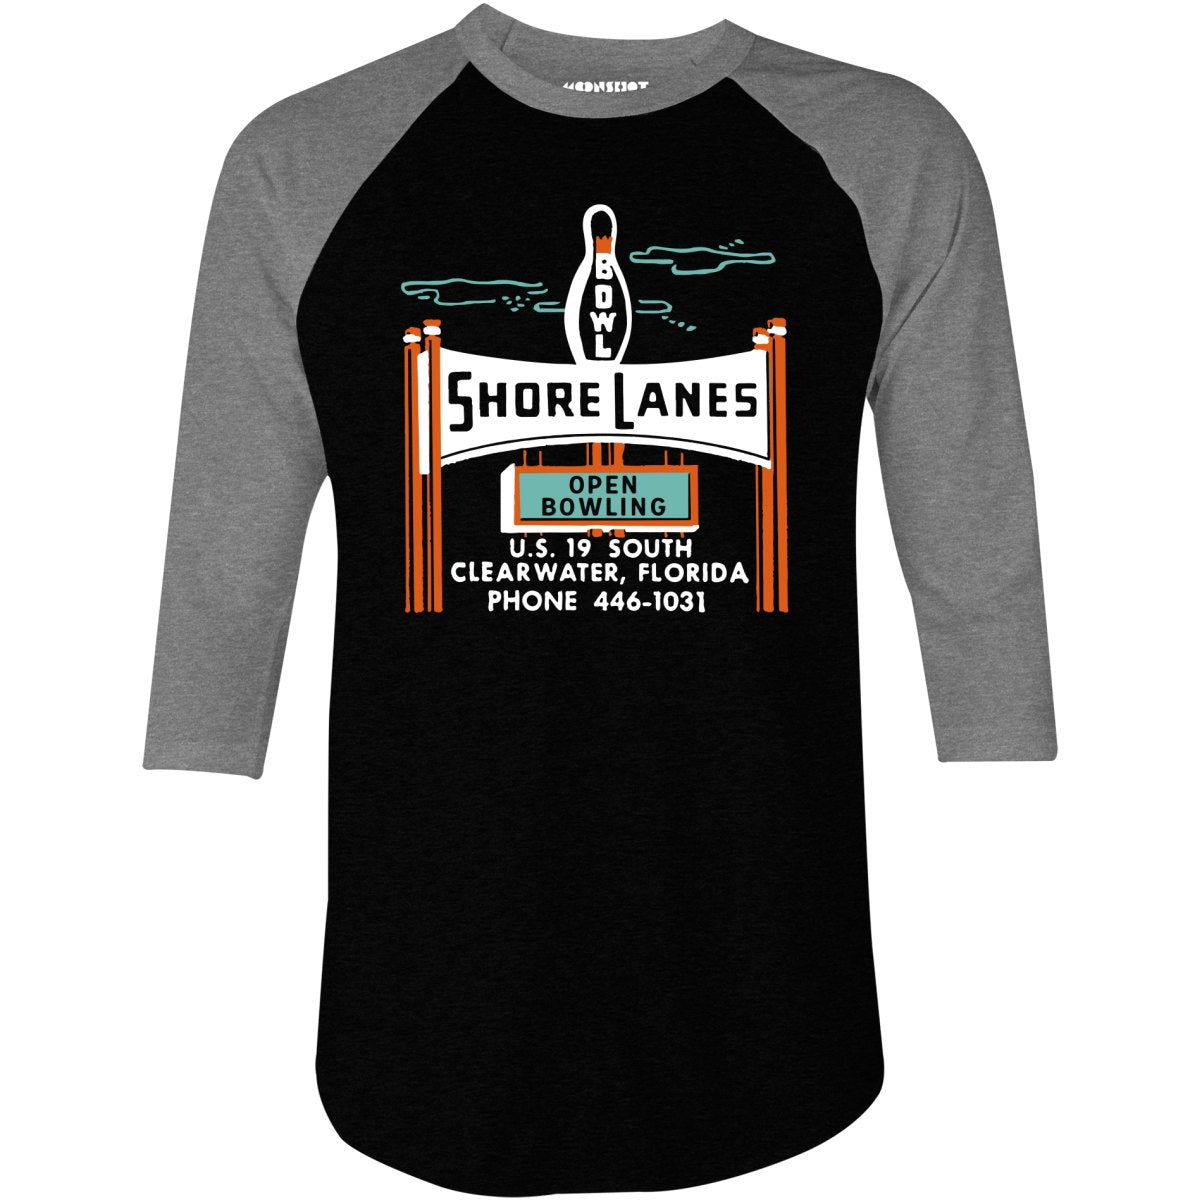 Shore Lanes - Clearwater, FL - Vintage Bowling Alley - 3/4 Sleeve Raglan T-Shirt